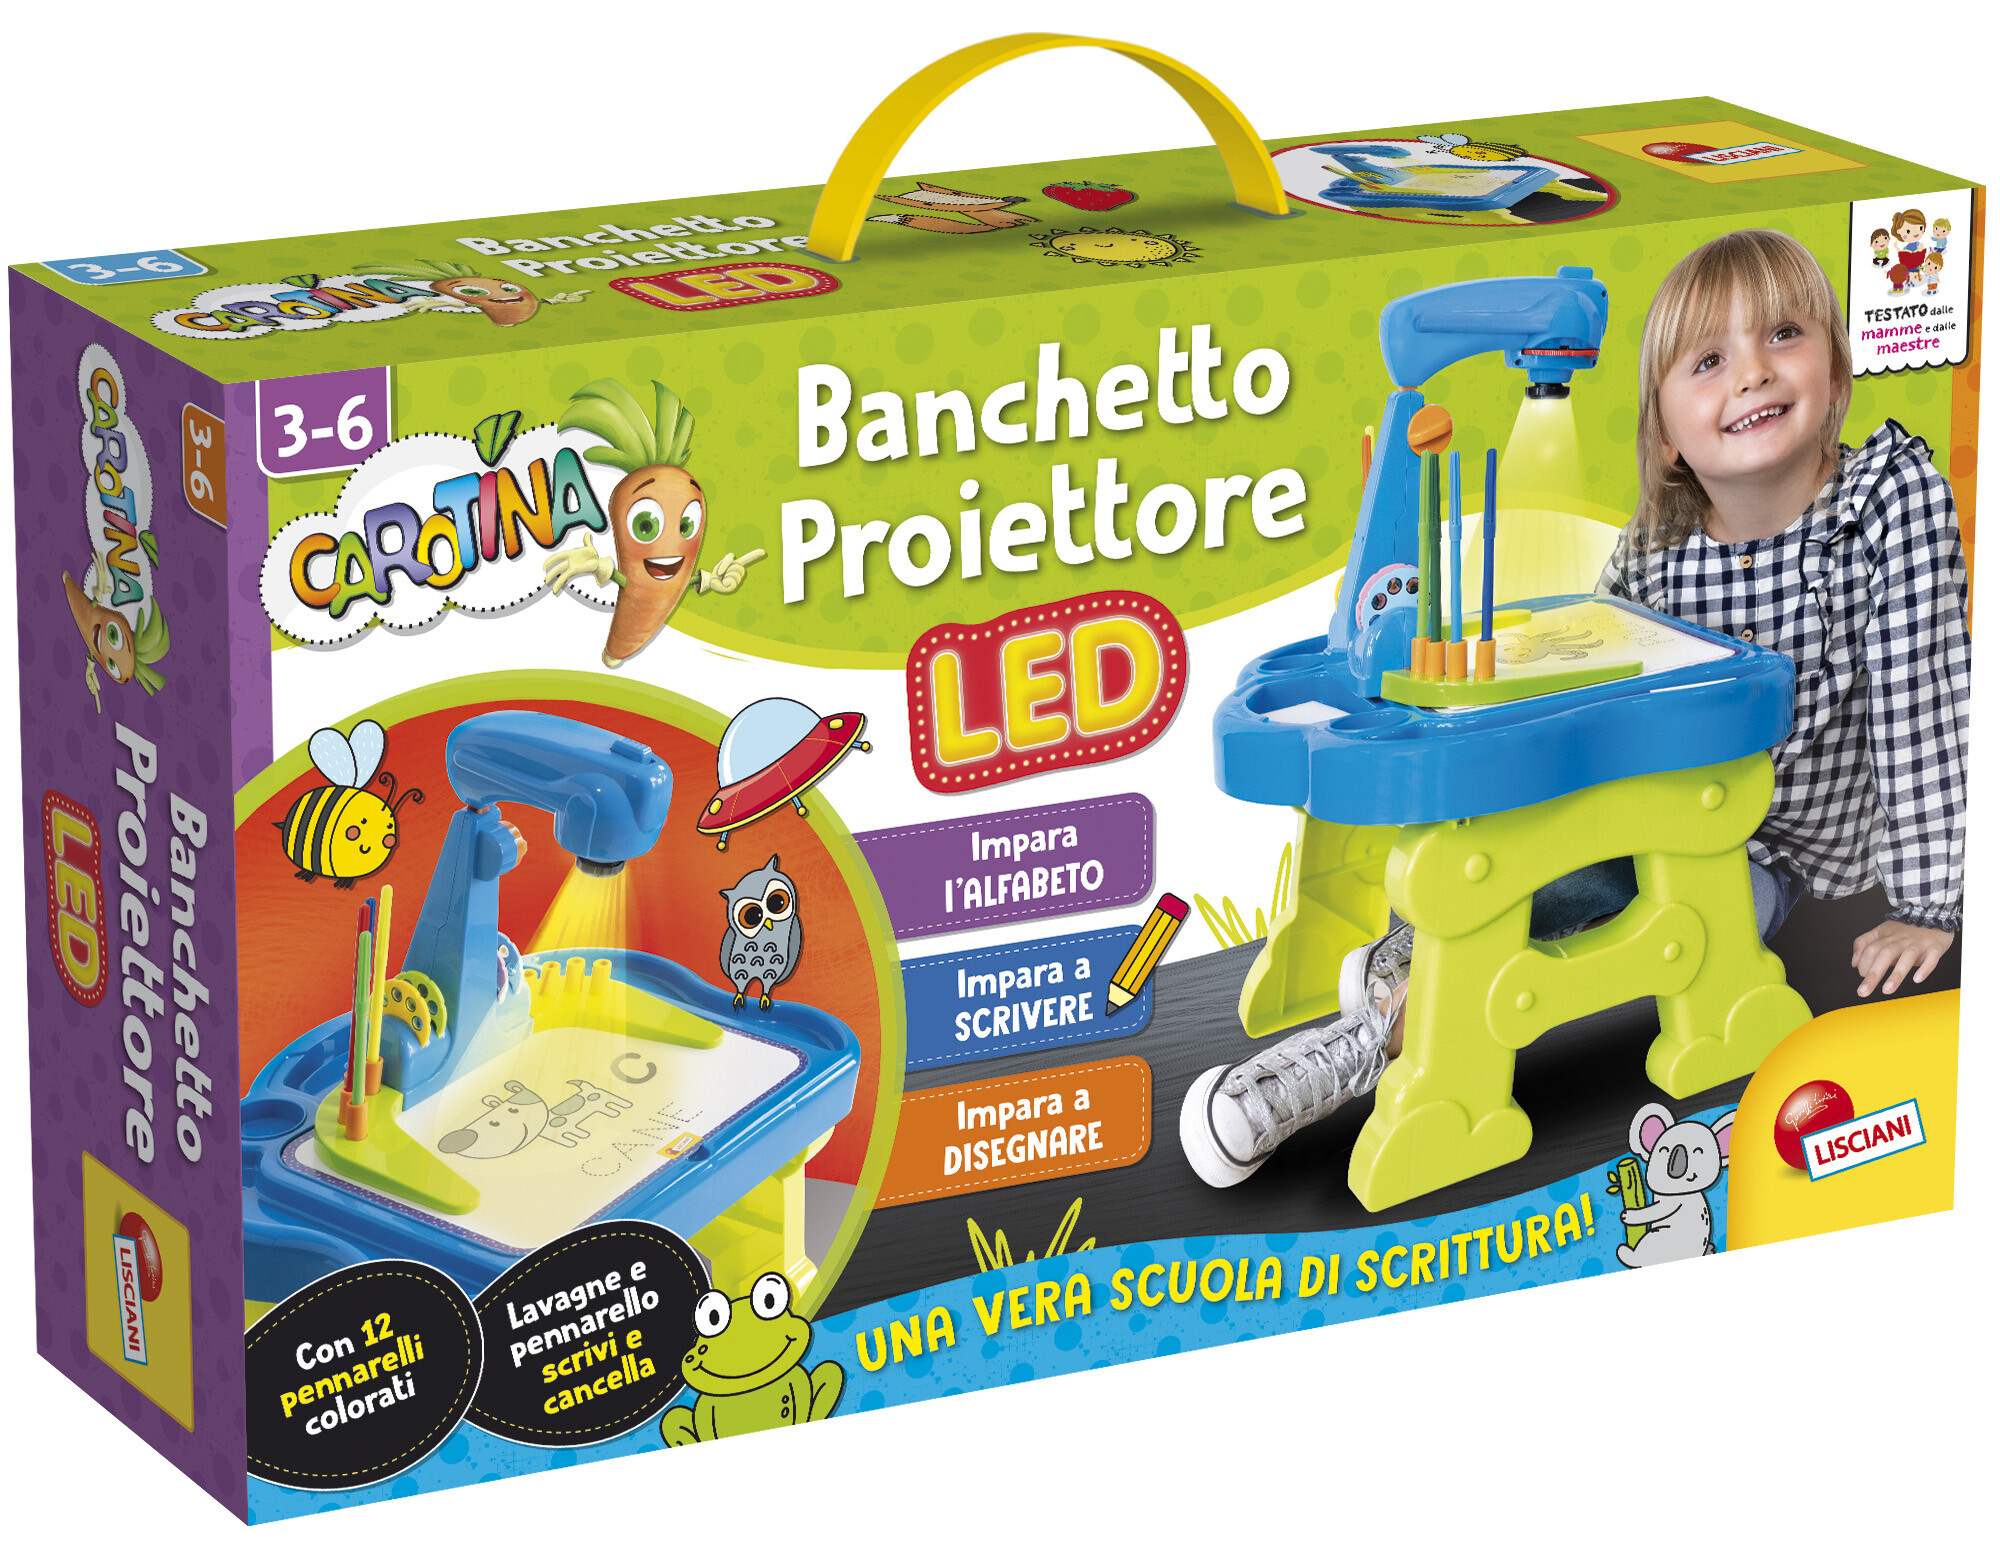 CAROTINA BANCHETTO PROIETTORE LED - Toys Center